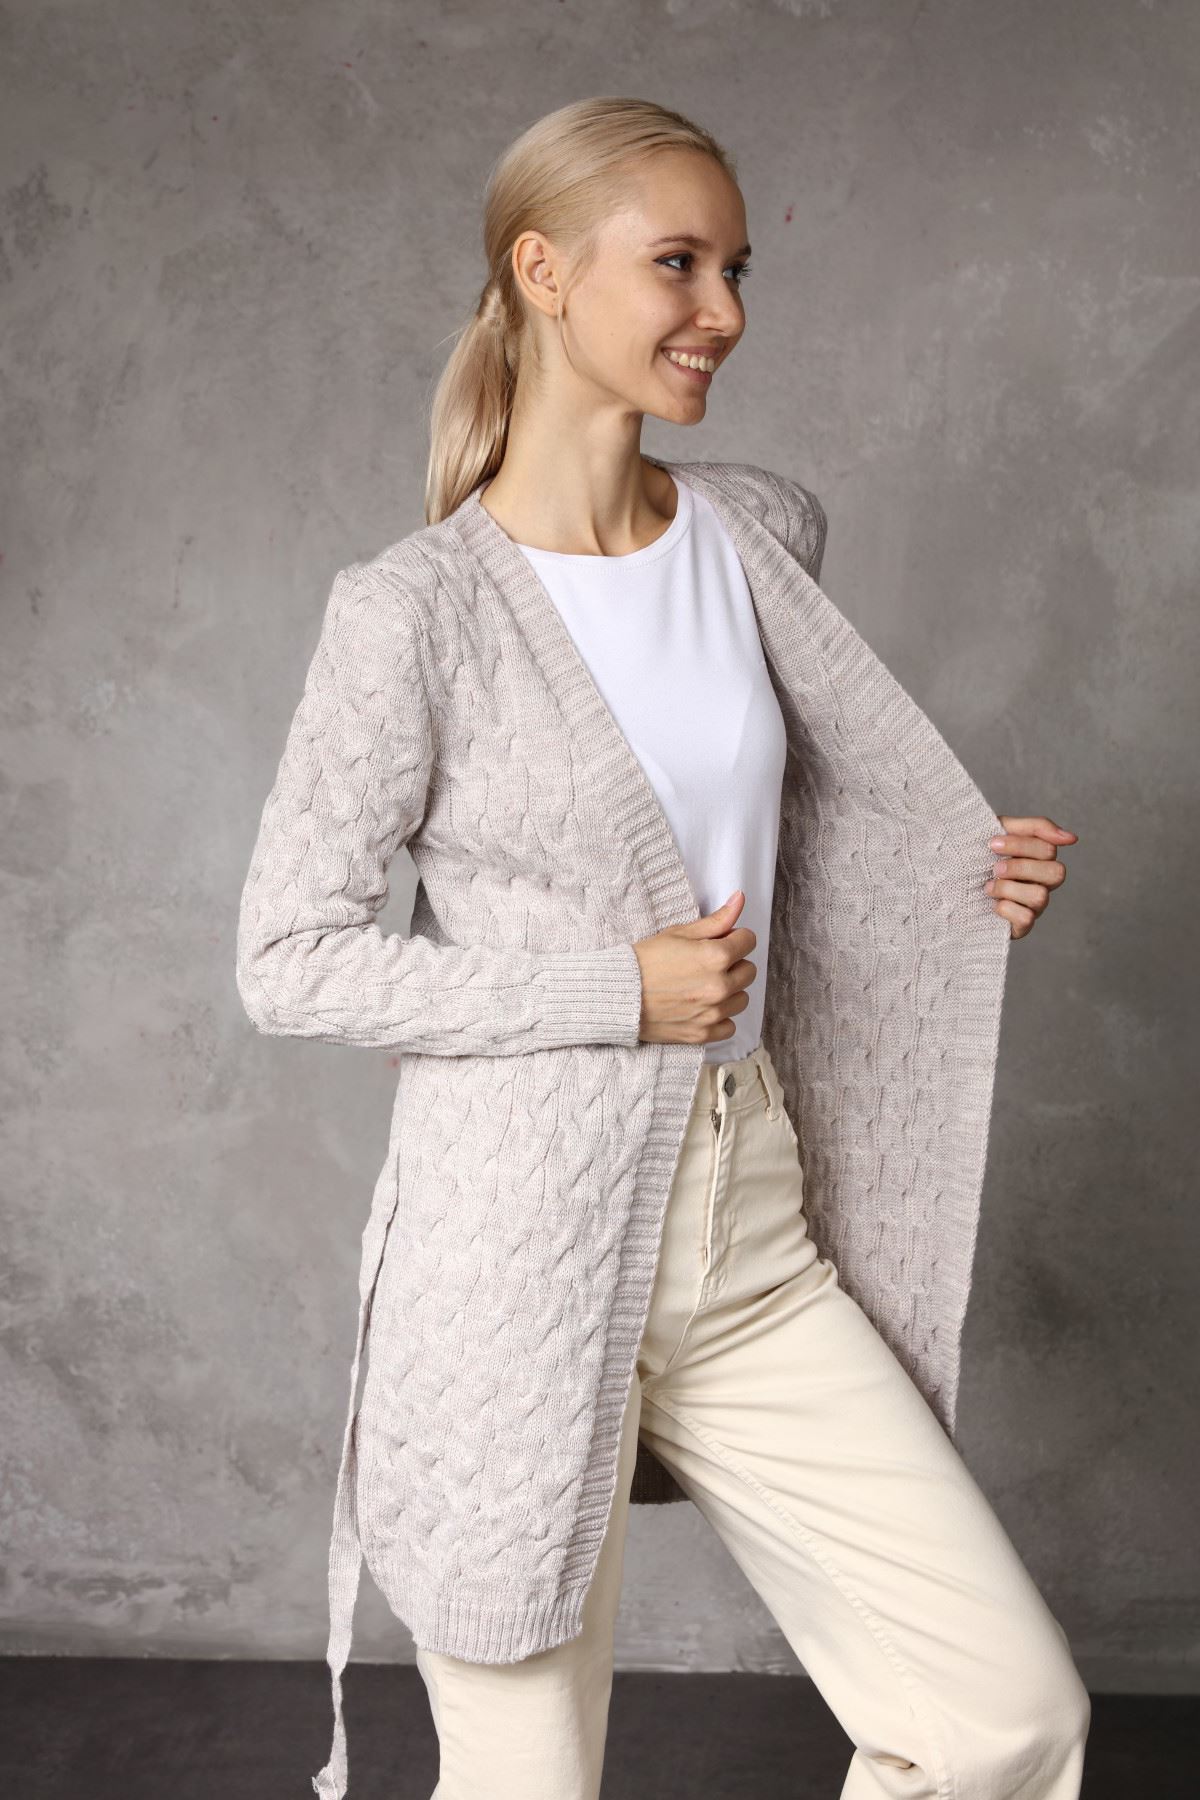 Belted Knit Patterned Women's Sweater Cardigan